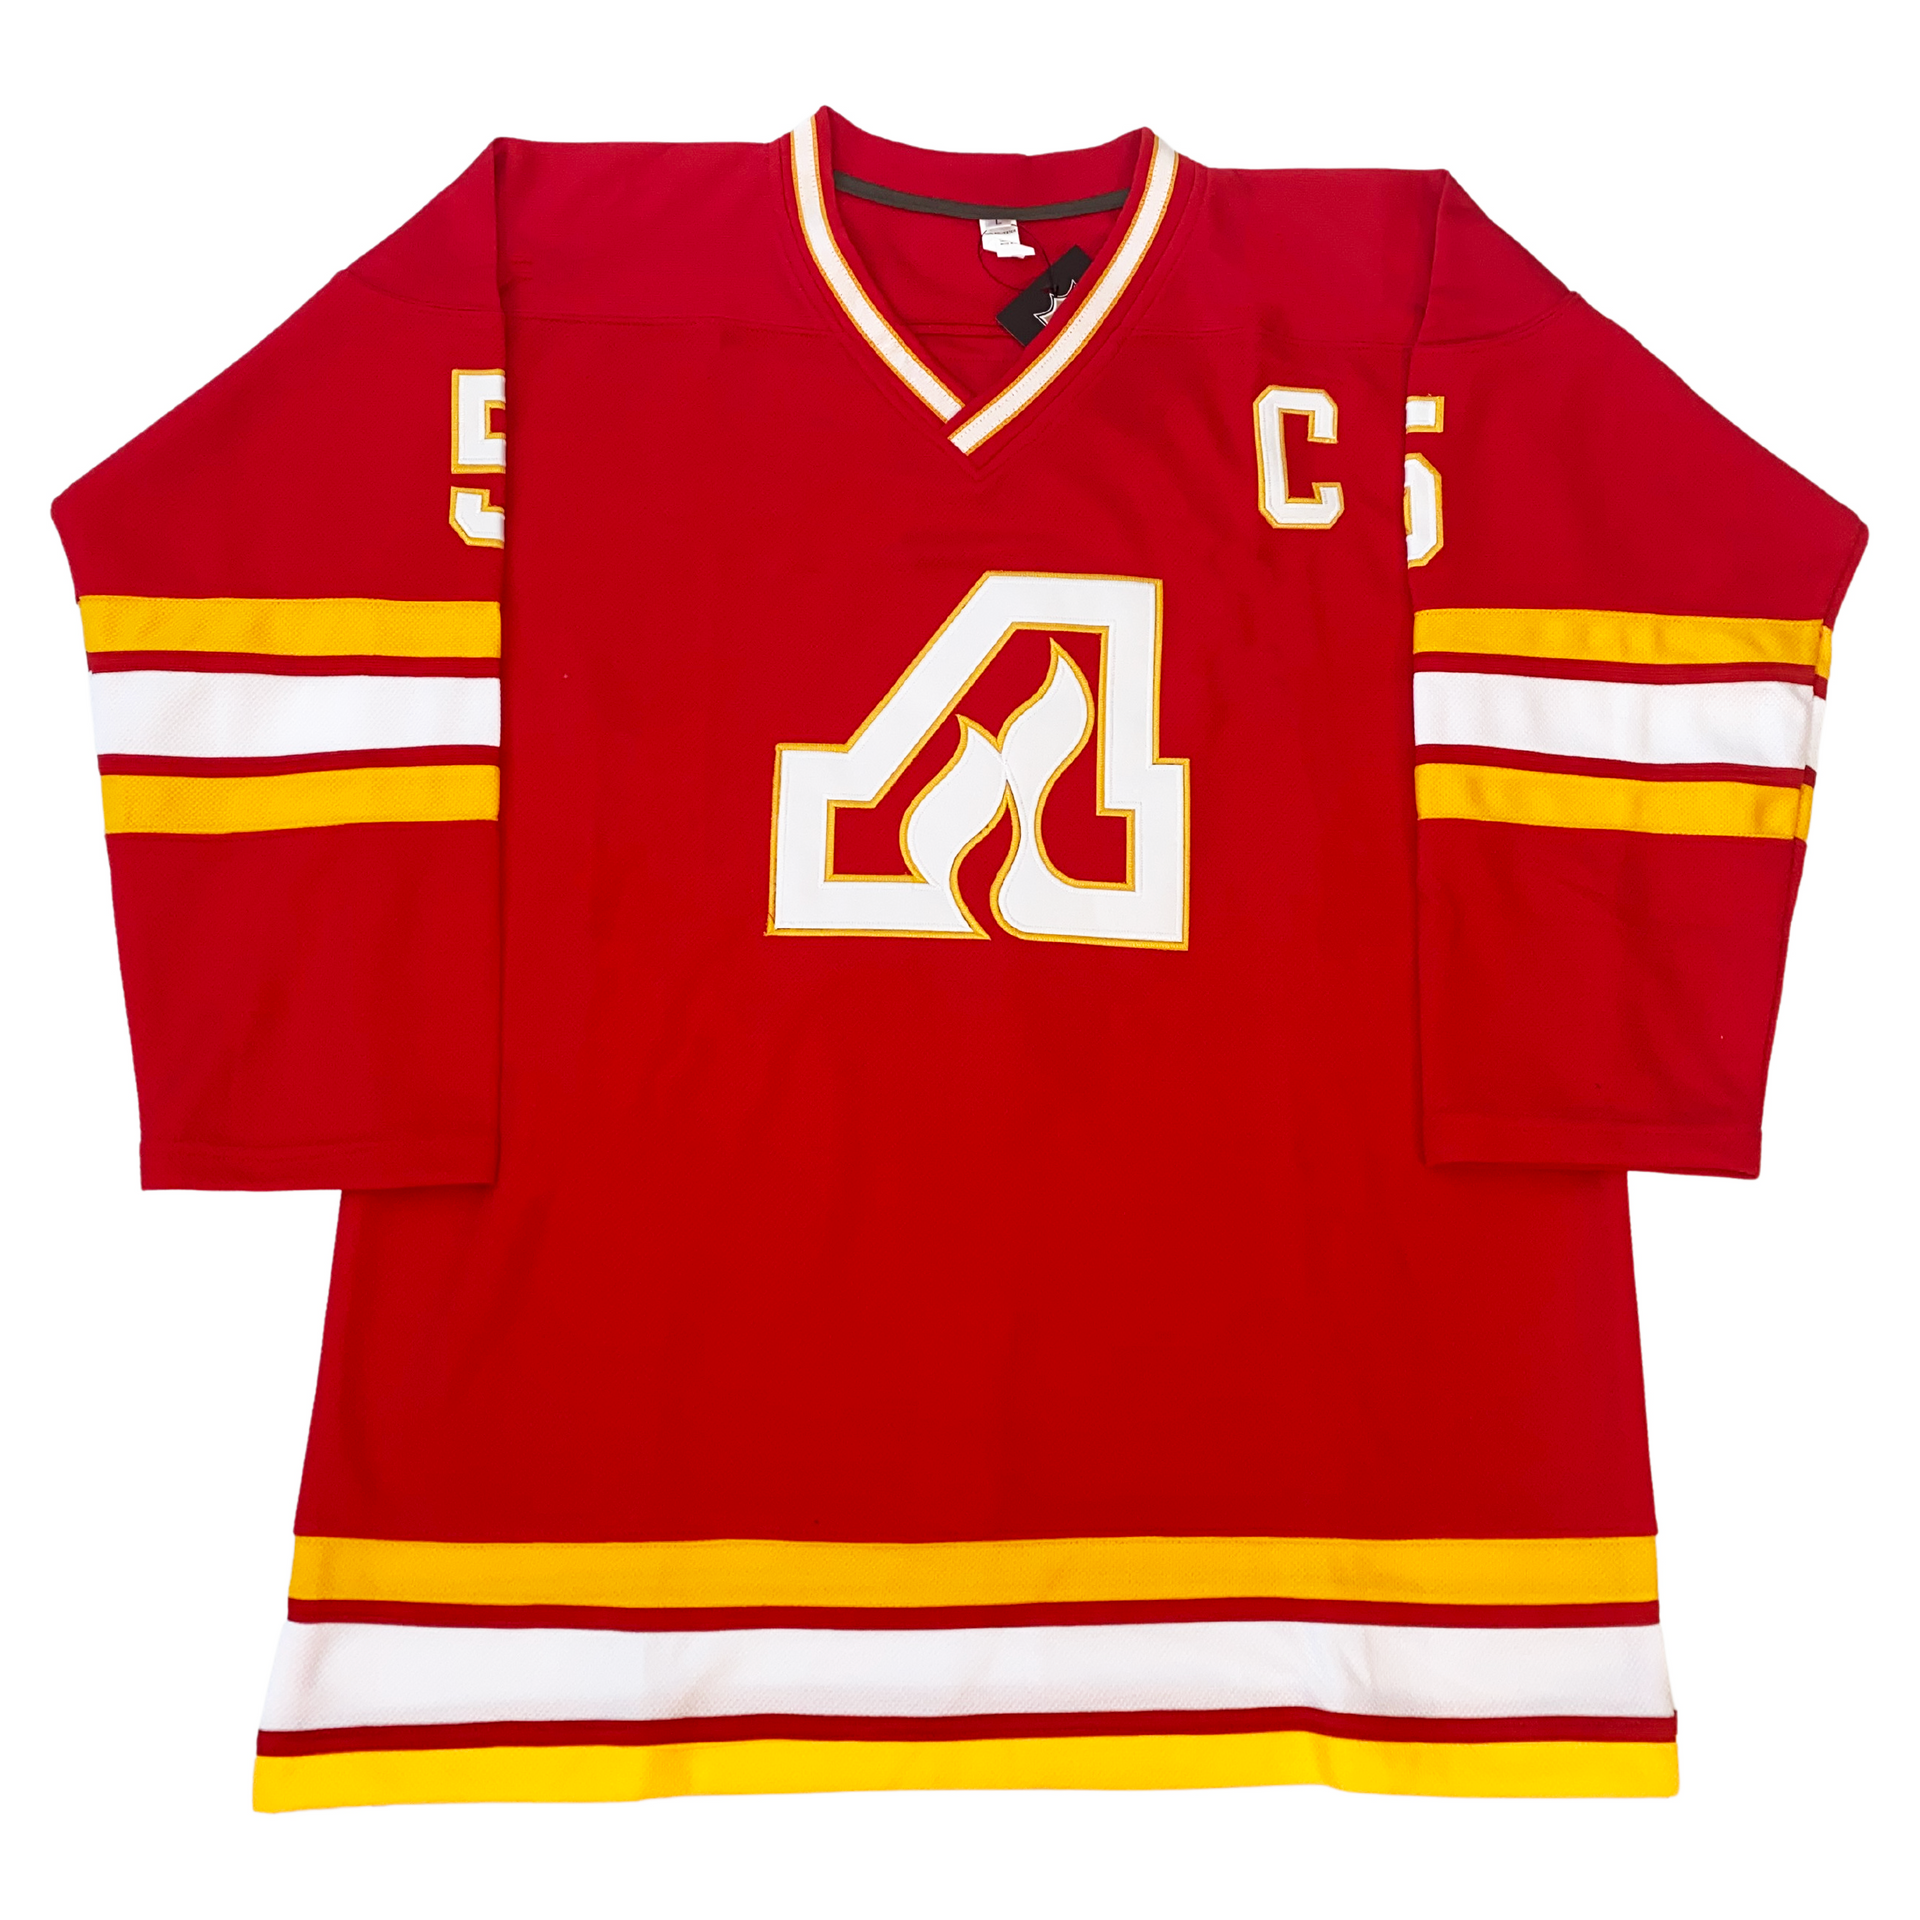 Clarington Flames Team Collection: Custom Uniforms, Apparel